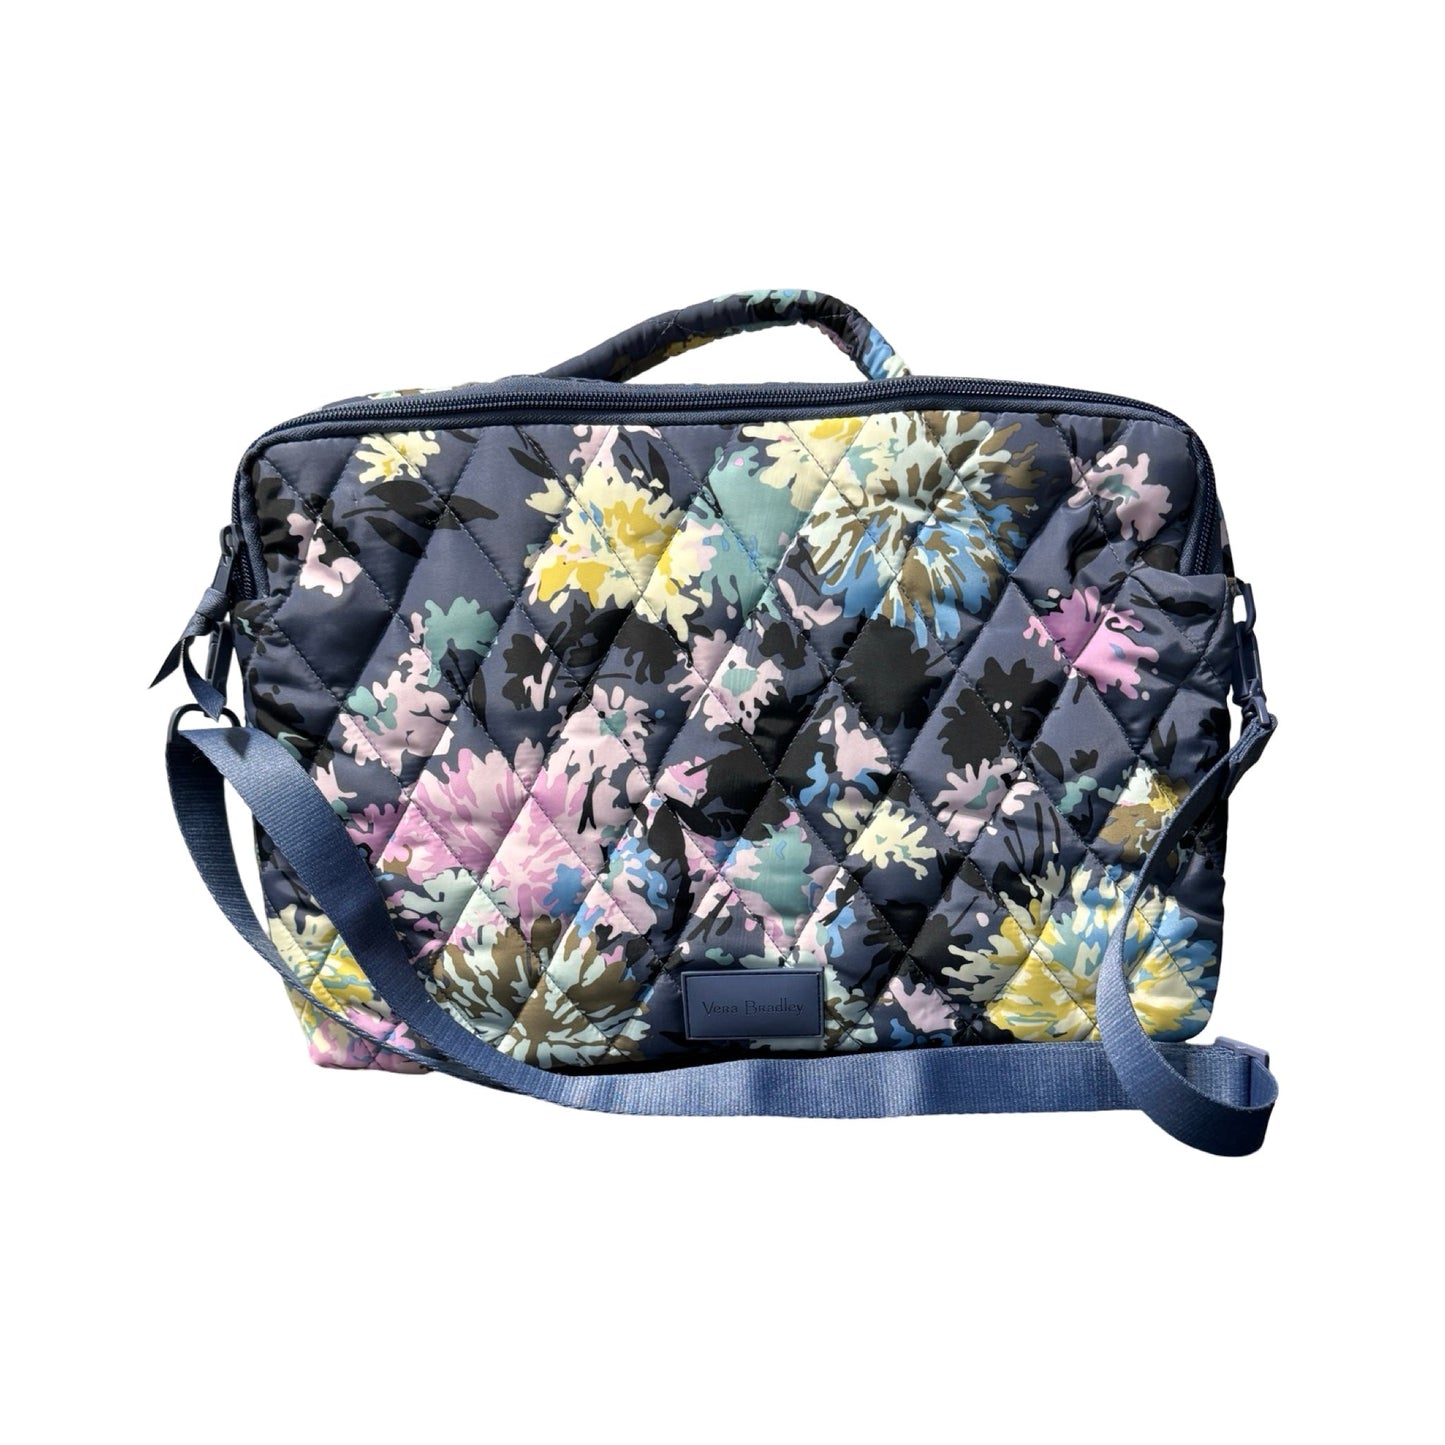 Floral Laptop Bag Vera Bradley, Size Medium